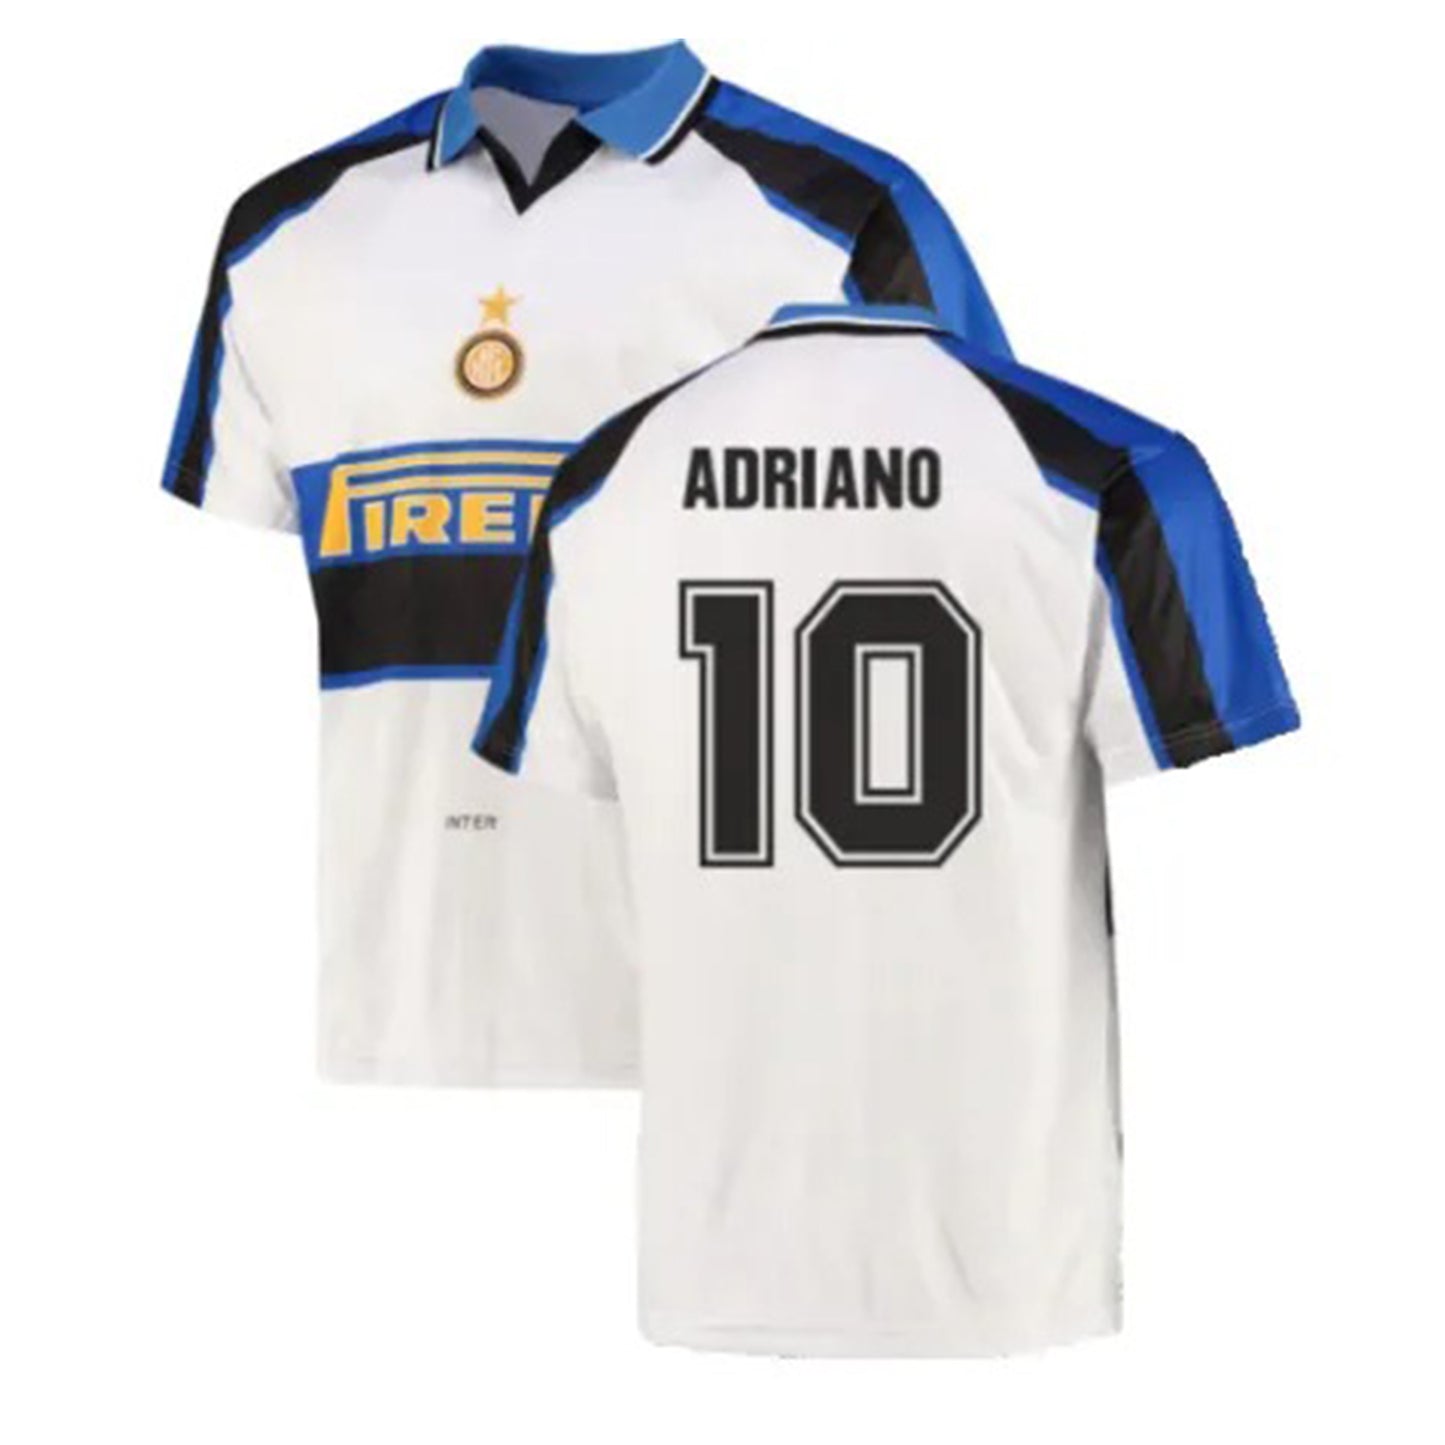 Adriano Inter Milan 10 Jersey